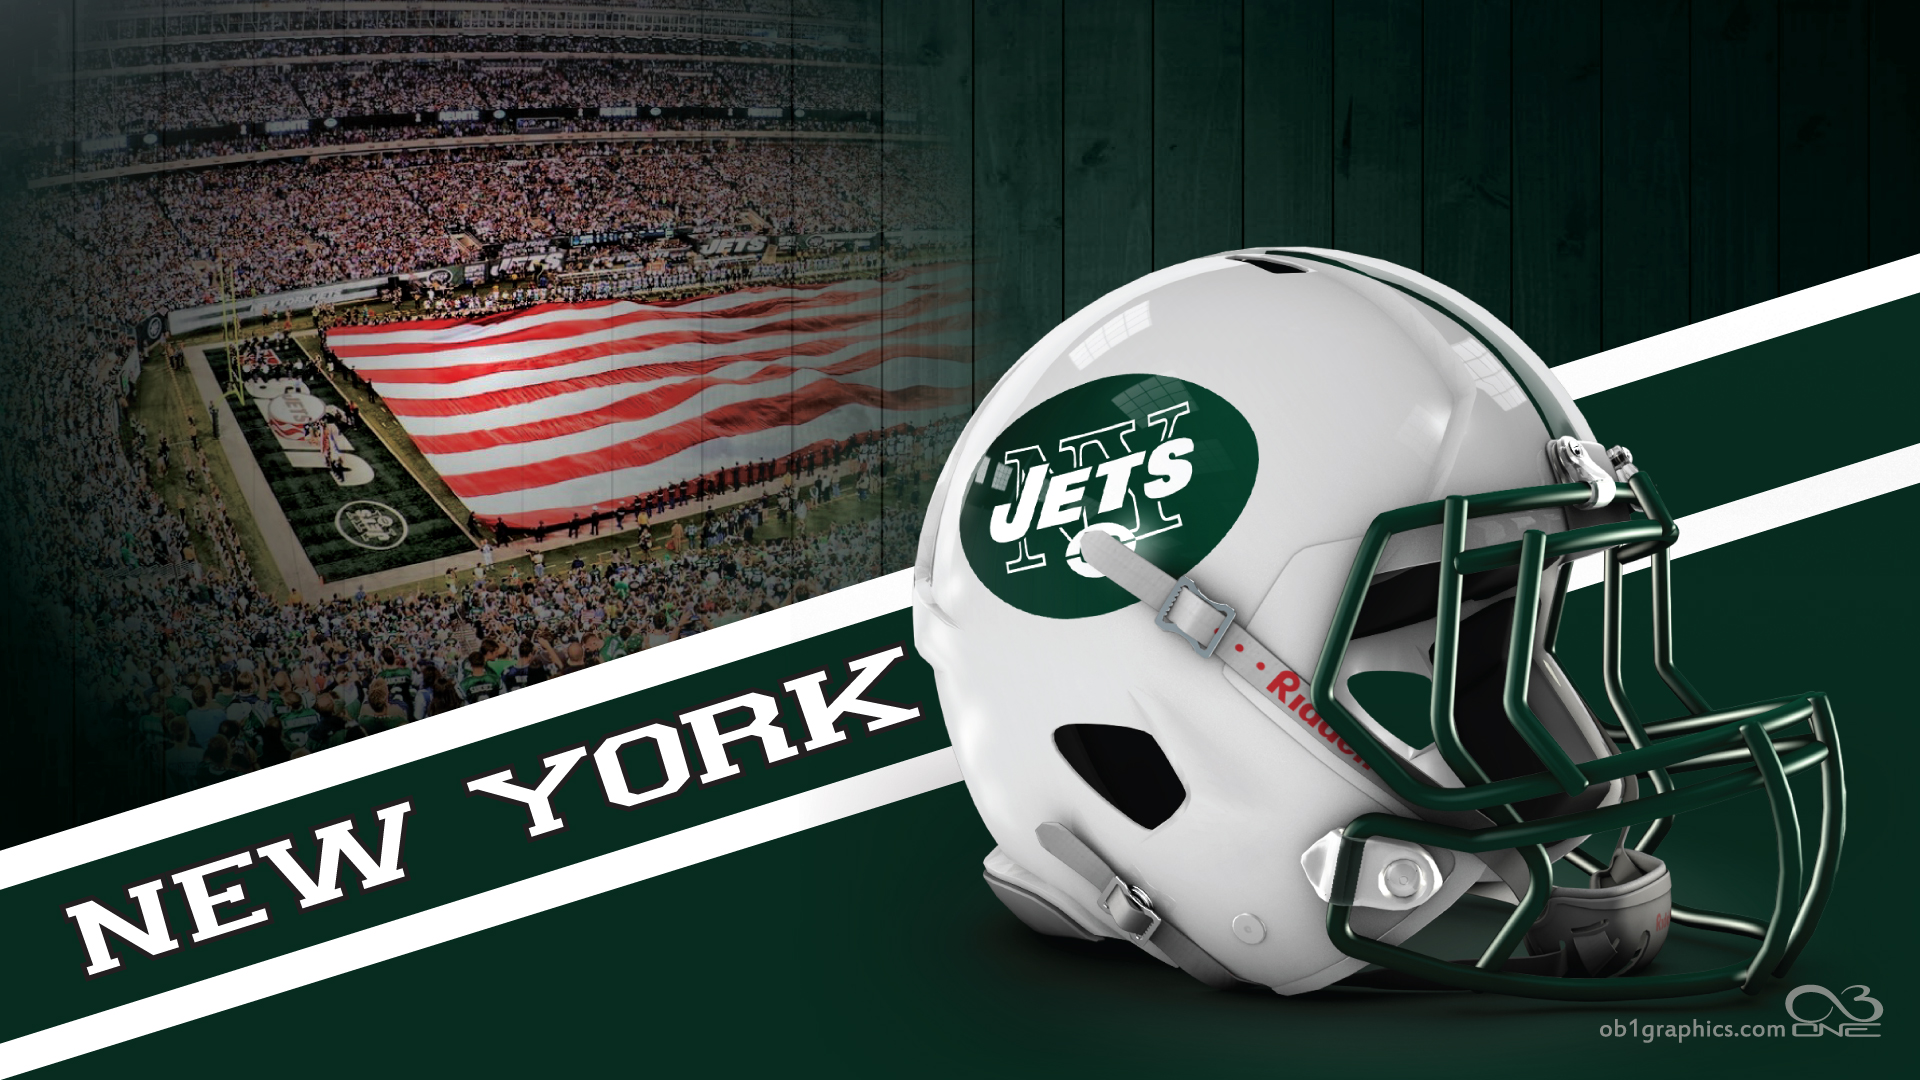 New York Jets on Twitter wallpaper version  httpstcobQ9wgUS27B  X